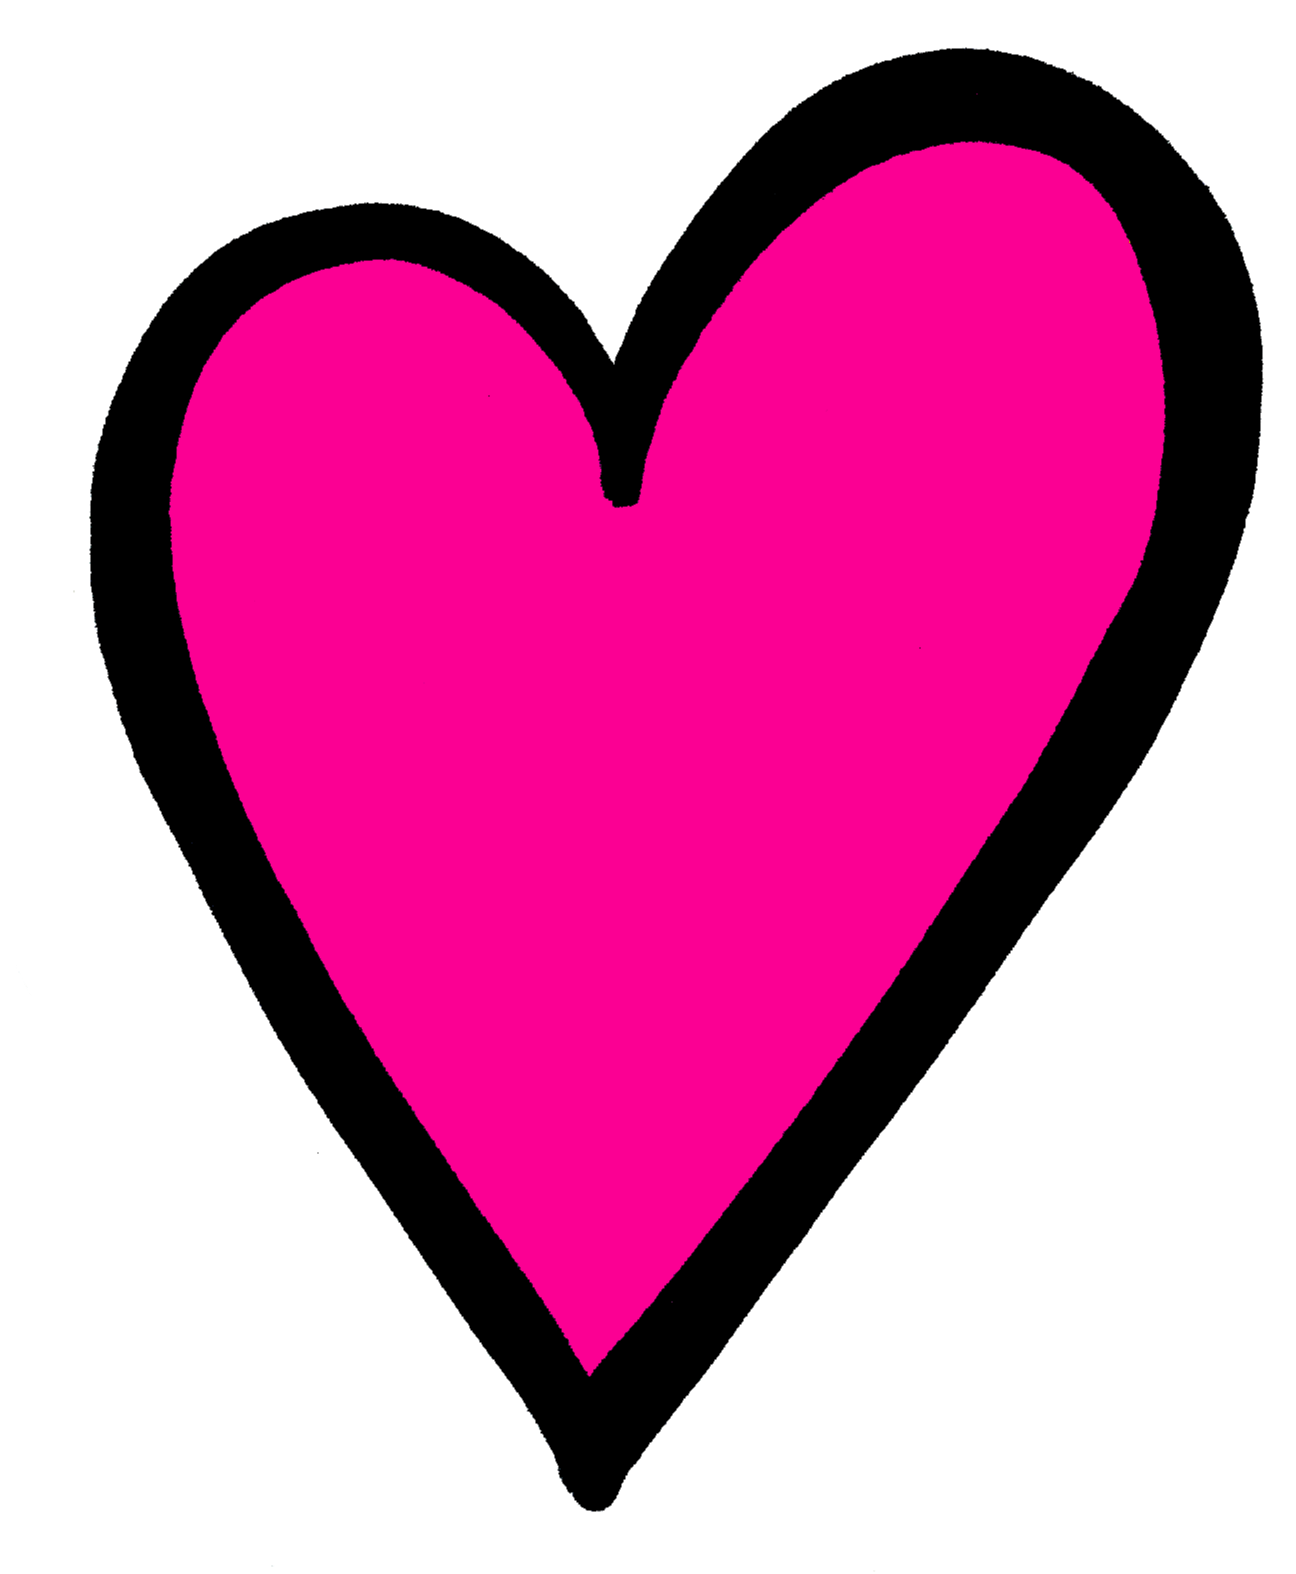 Hot Pink Heart Transparent Image PNG Image